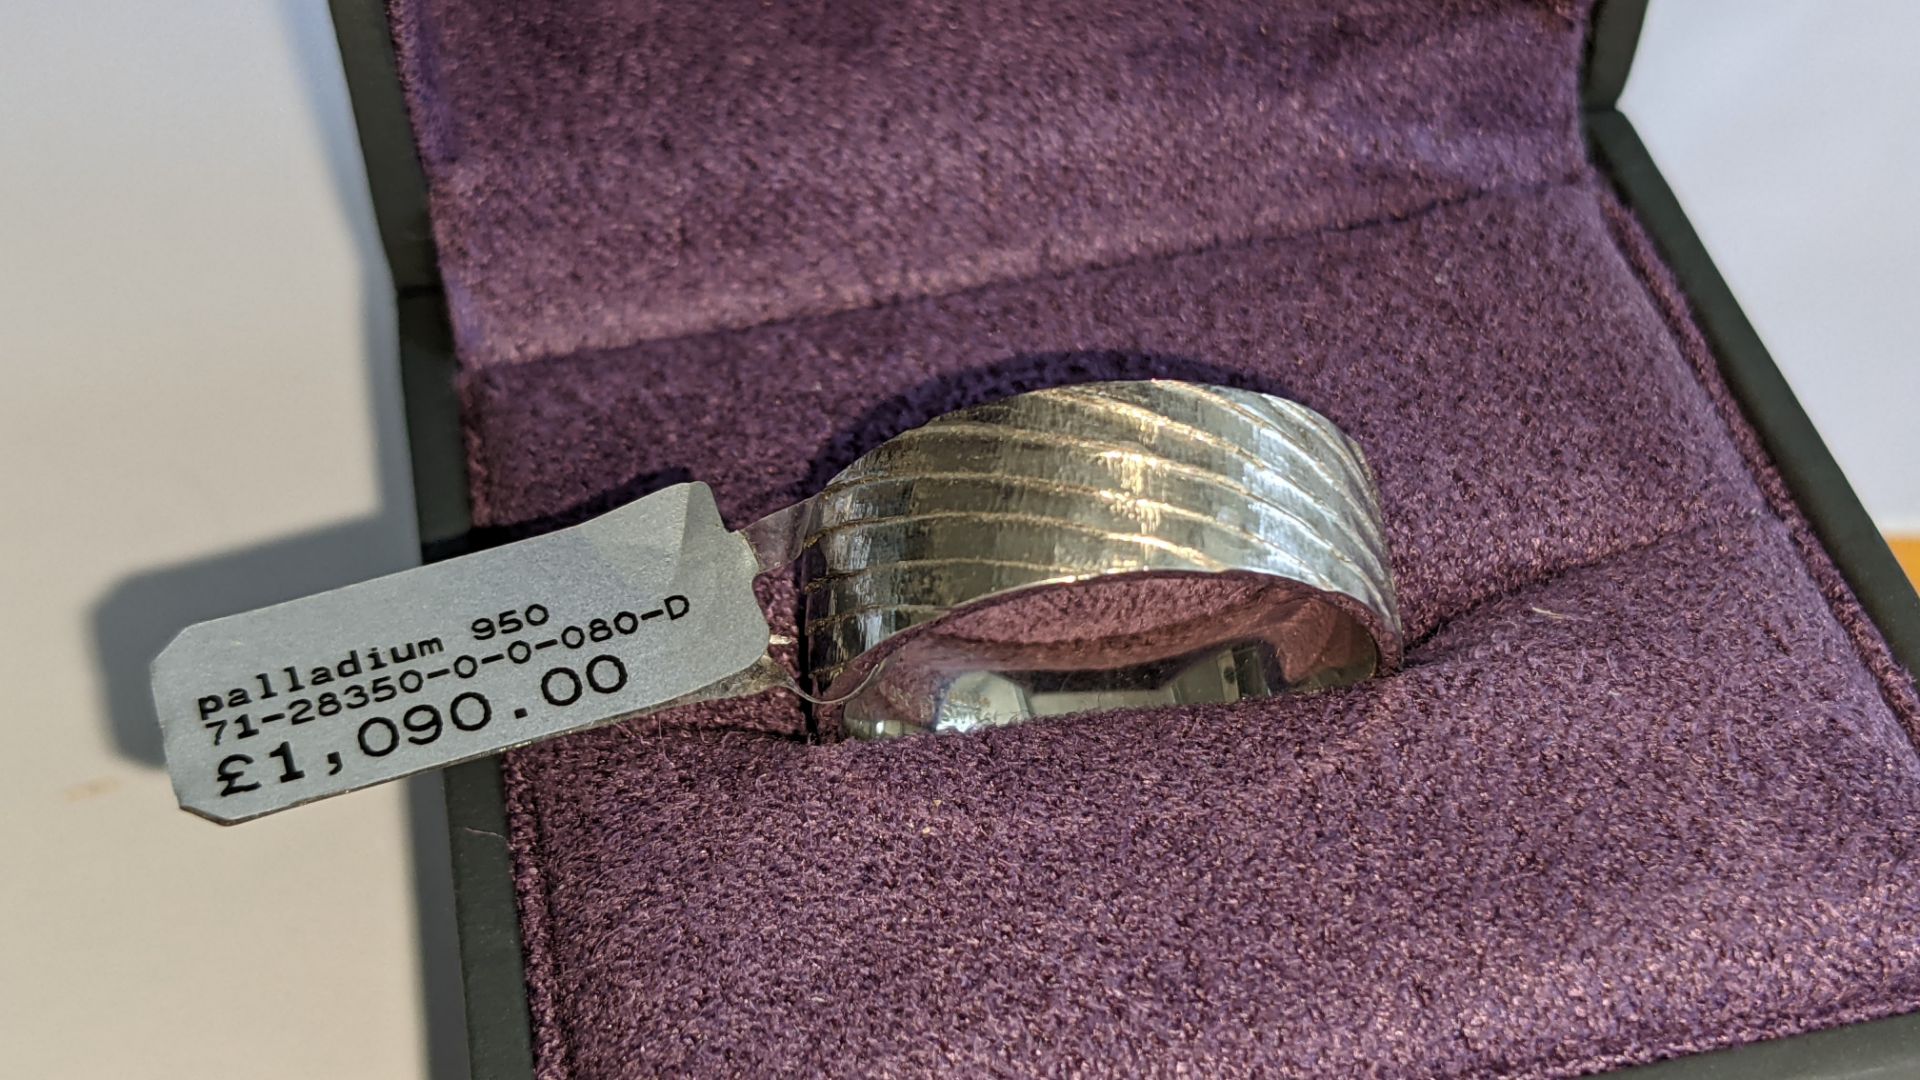 Platinum 950 8mm striped wedding band. RRP £1,090 - Image 3 of 12